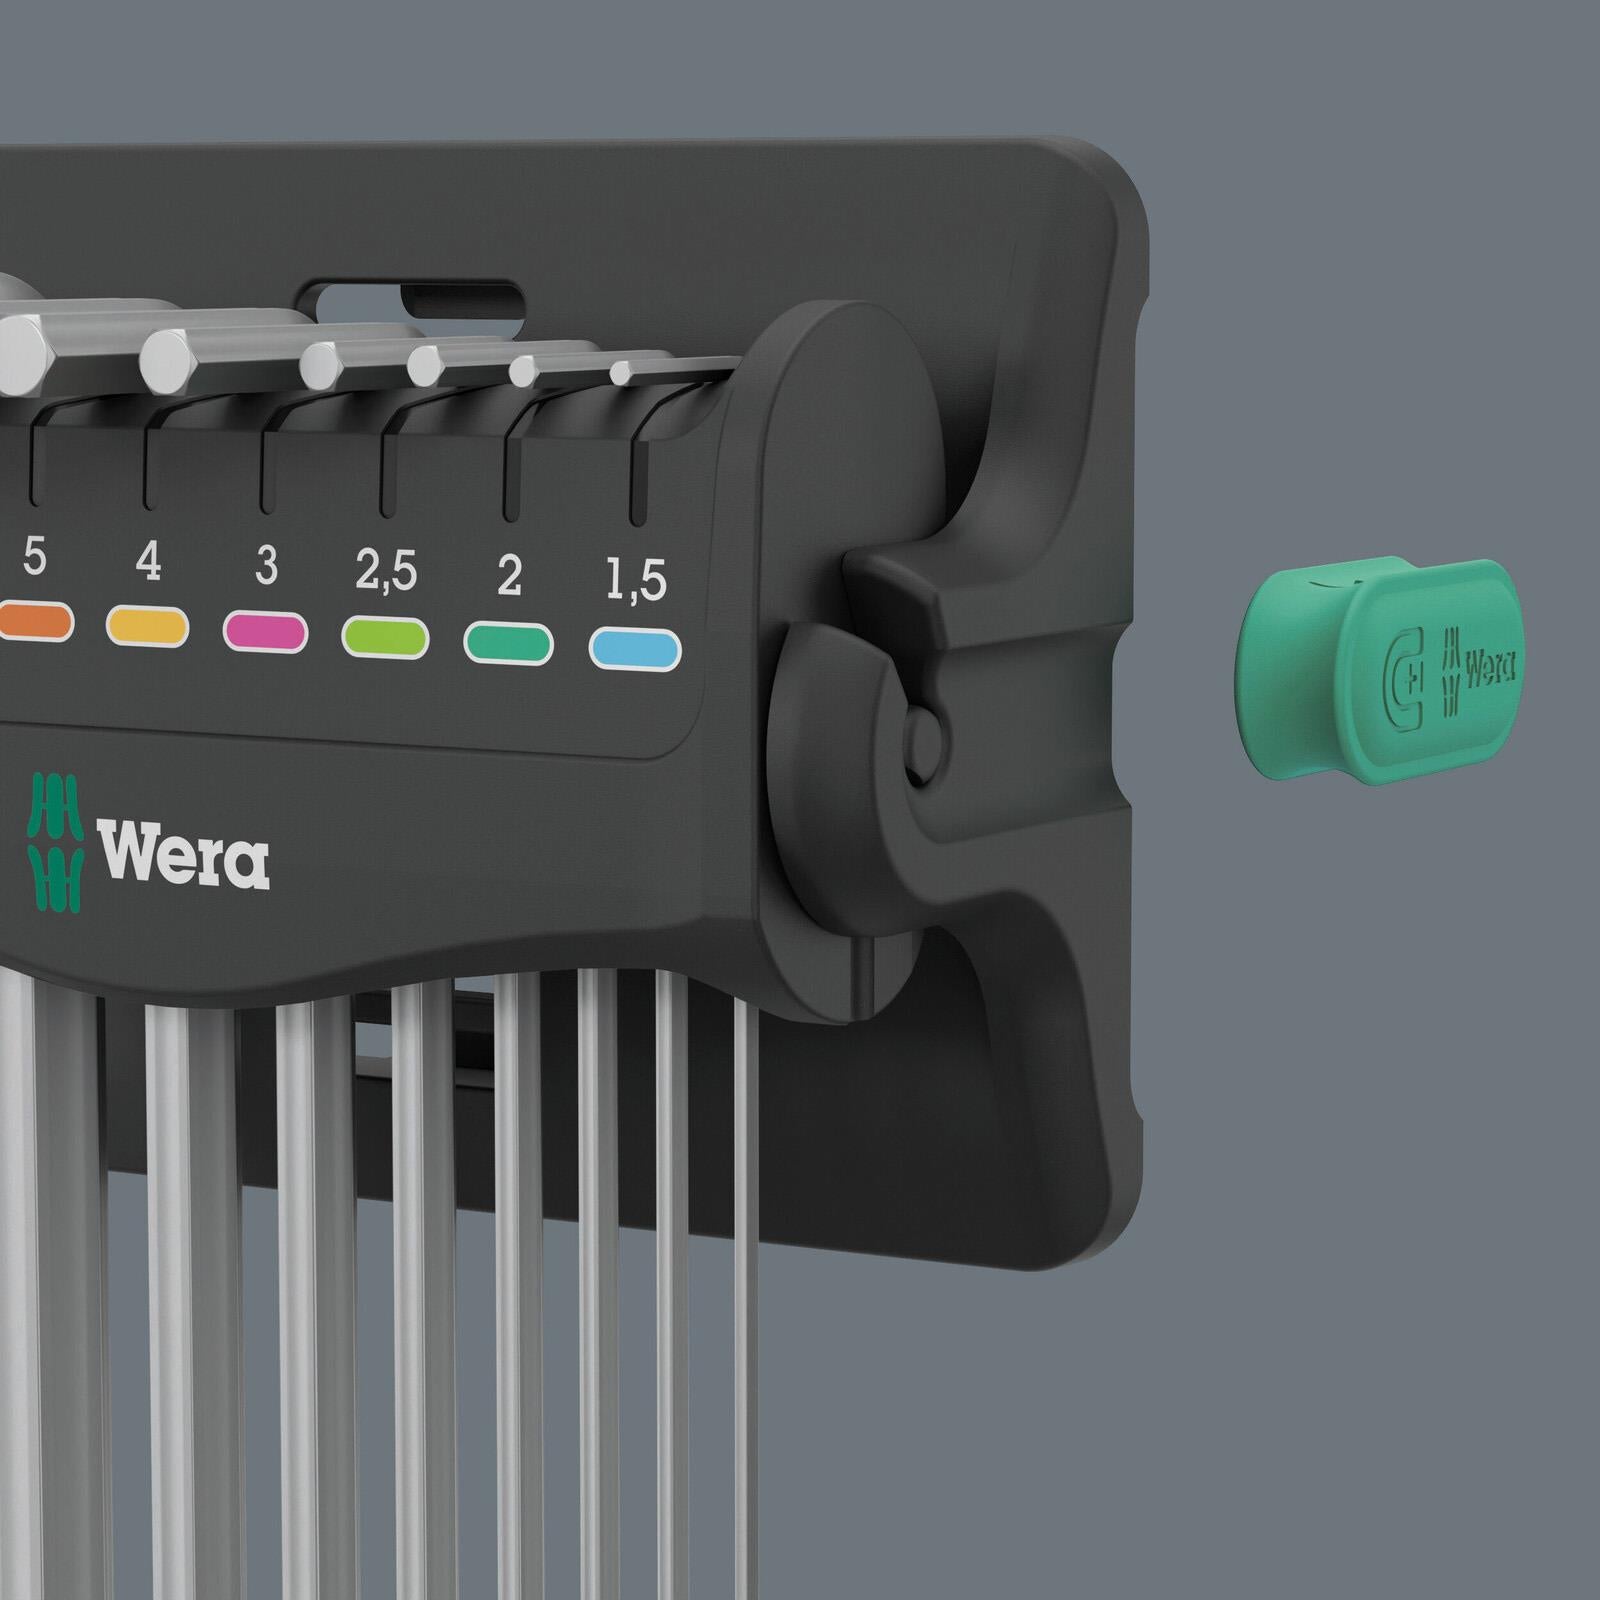 Wera Hex Key Set Stand Wall Rack 950/9 Hex Plus 8 L-Key Set Metric Chrome Plated 9 Pieces 1.5-10mm